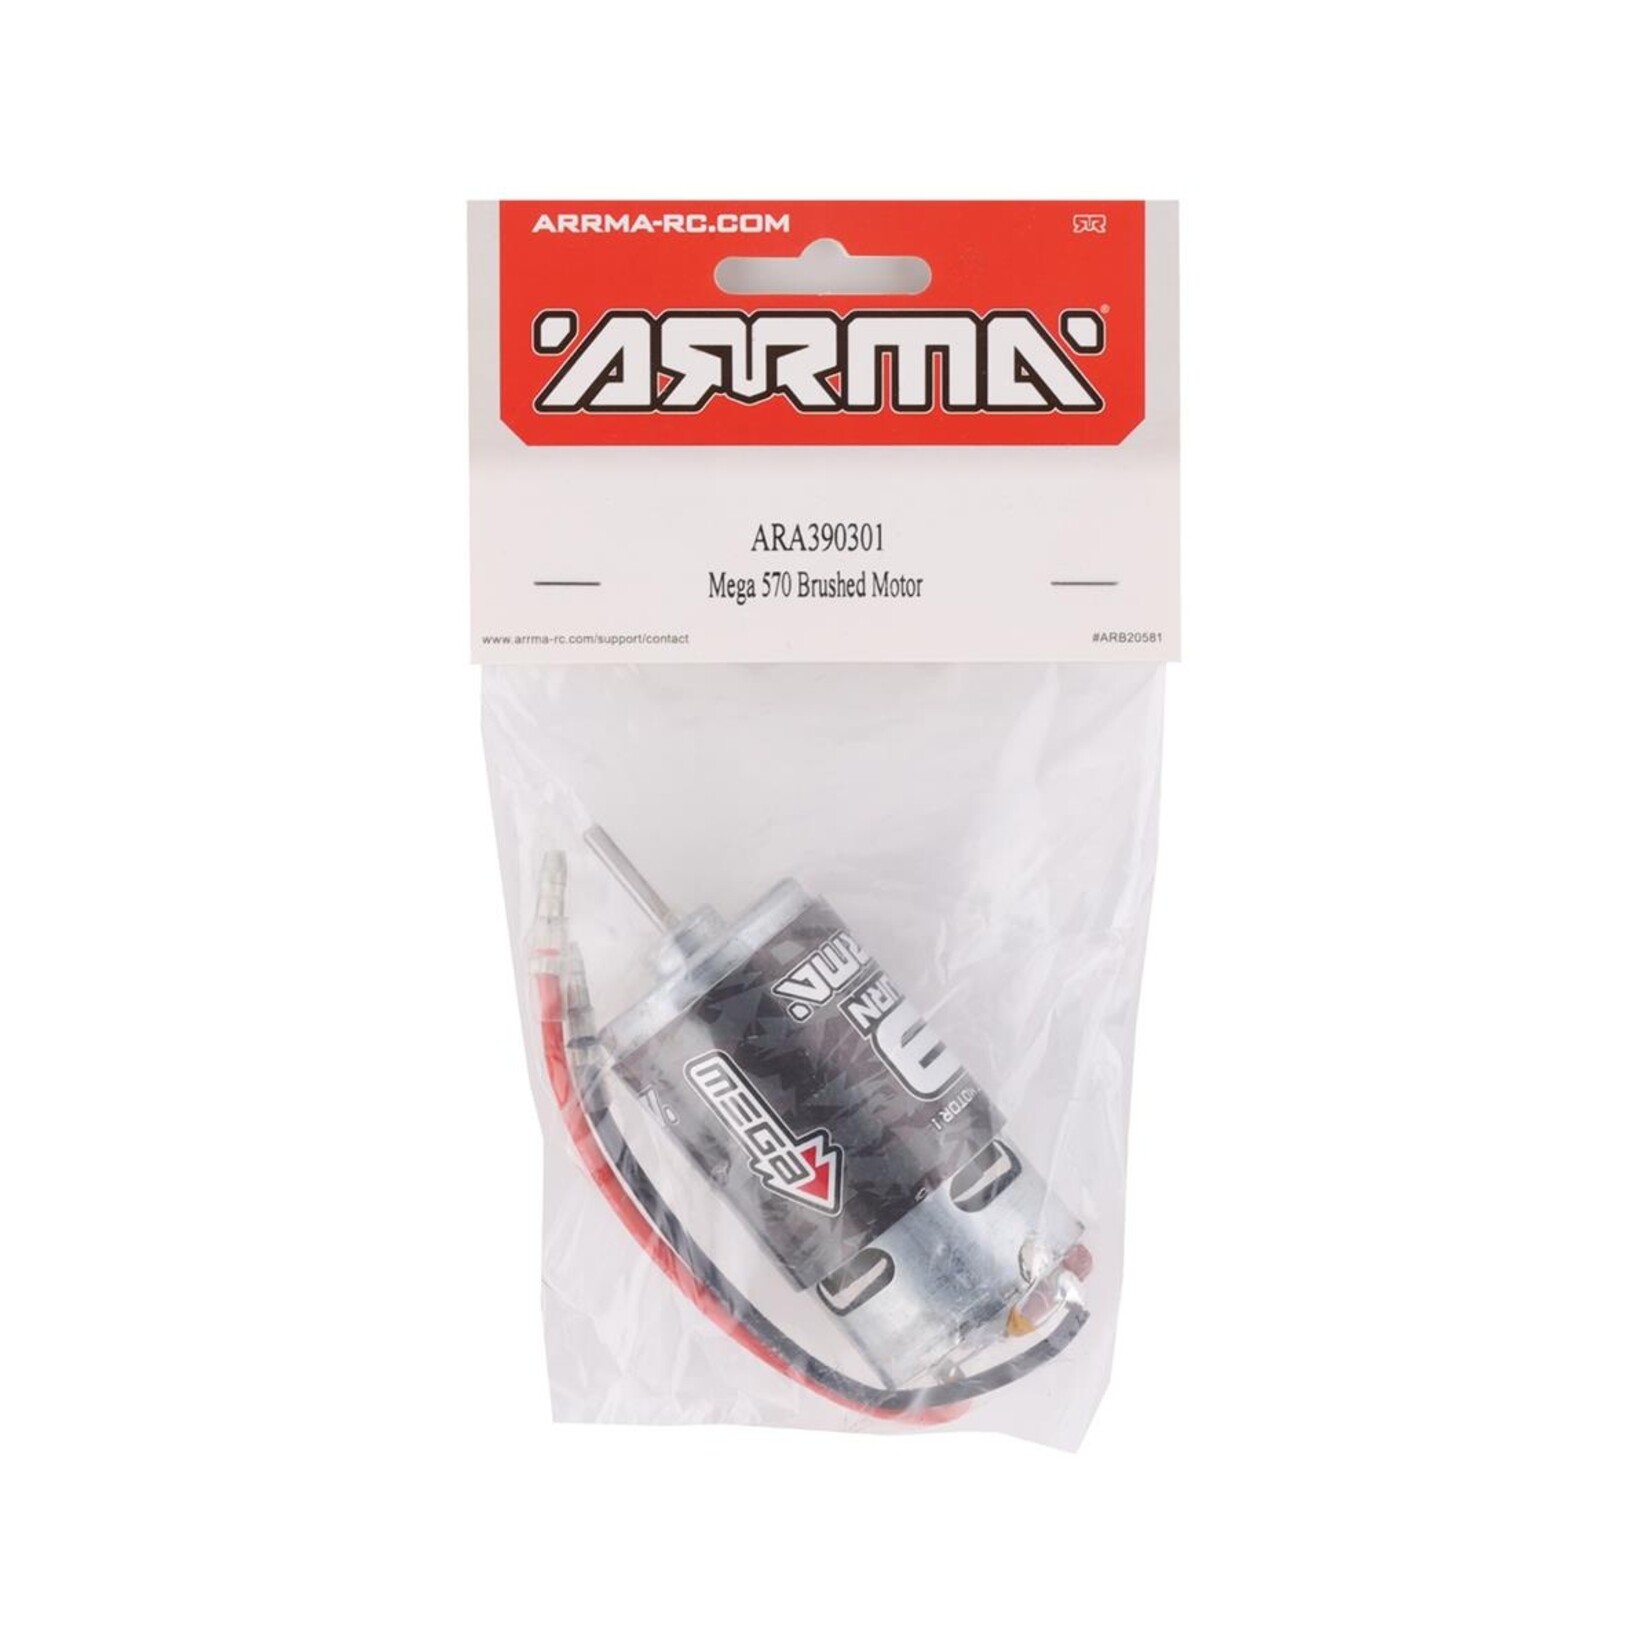 ARRMA Arrma Mega 570 Brushed Motor (9T) #ARA390301